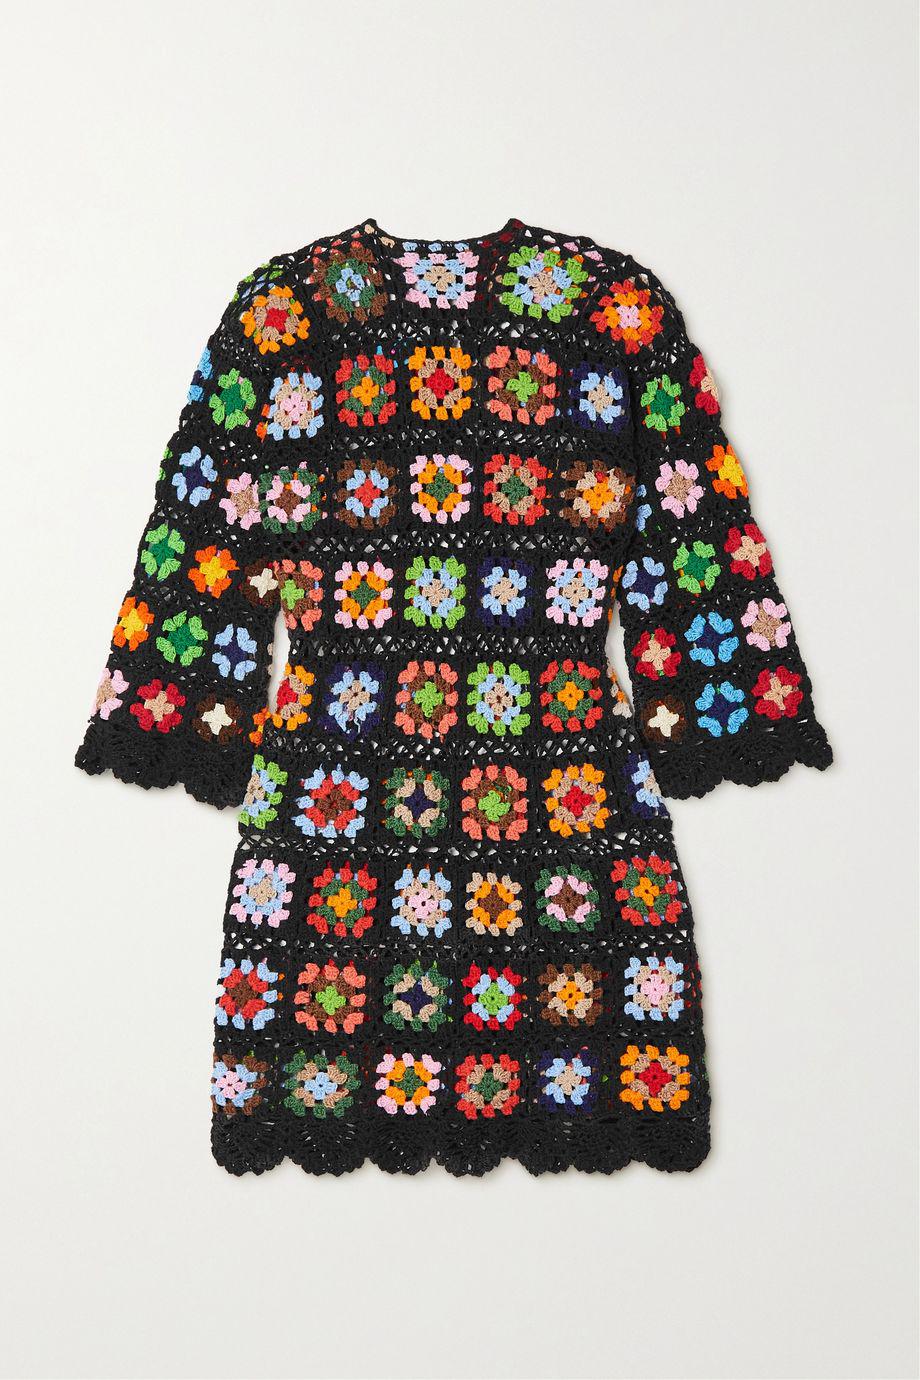 Love Square crocheted cotton mini dress by ALIX PINHO